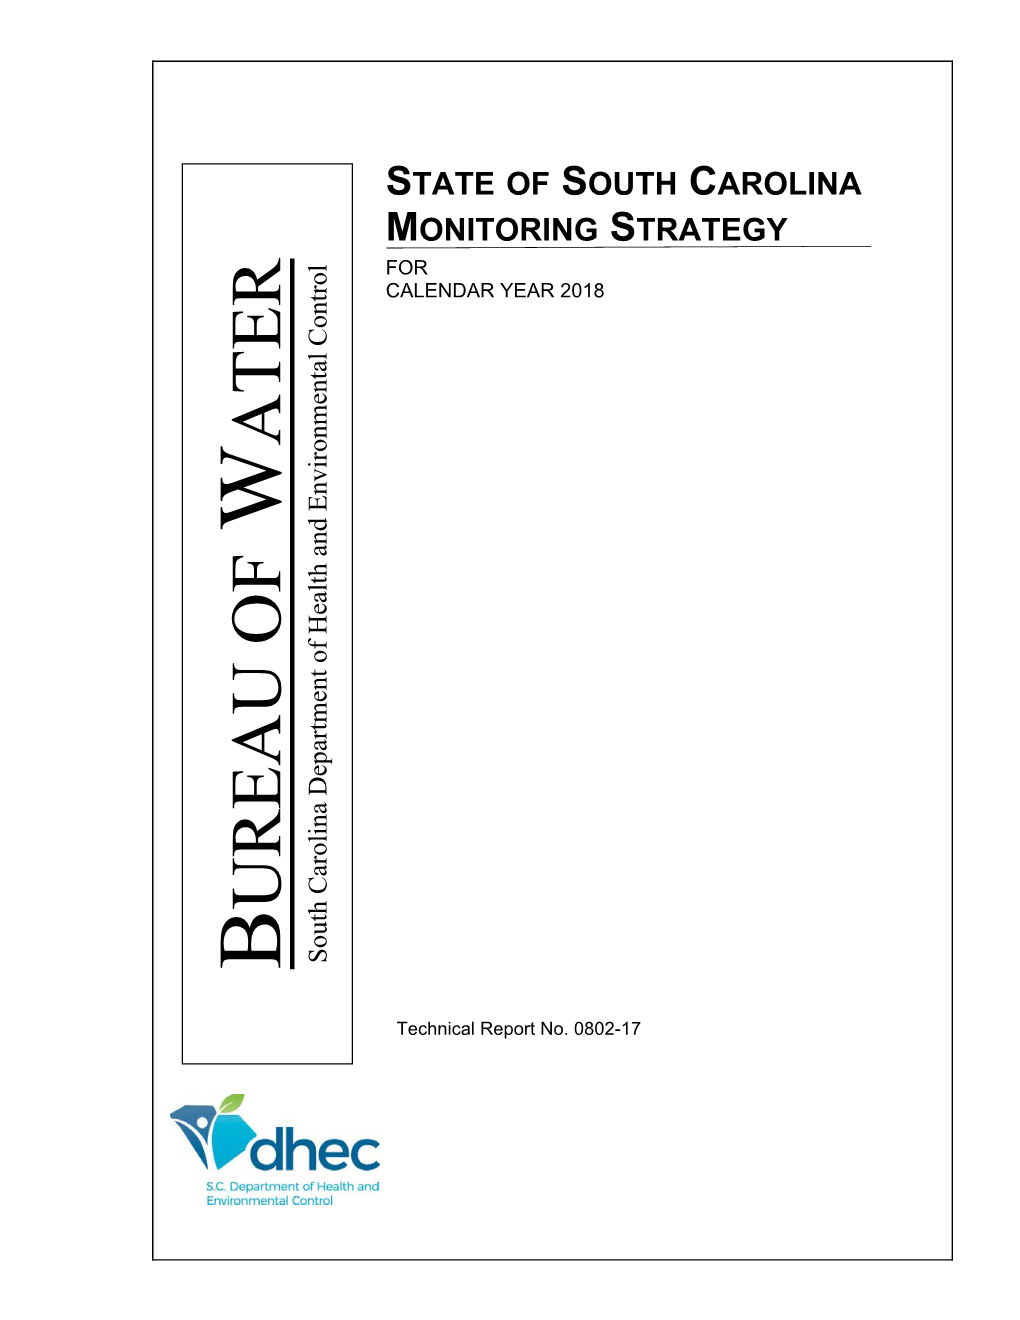 State of South Carolina Monitoring Strategy